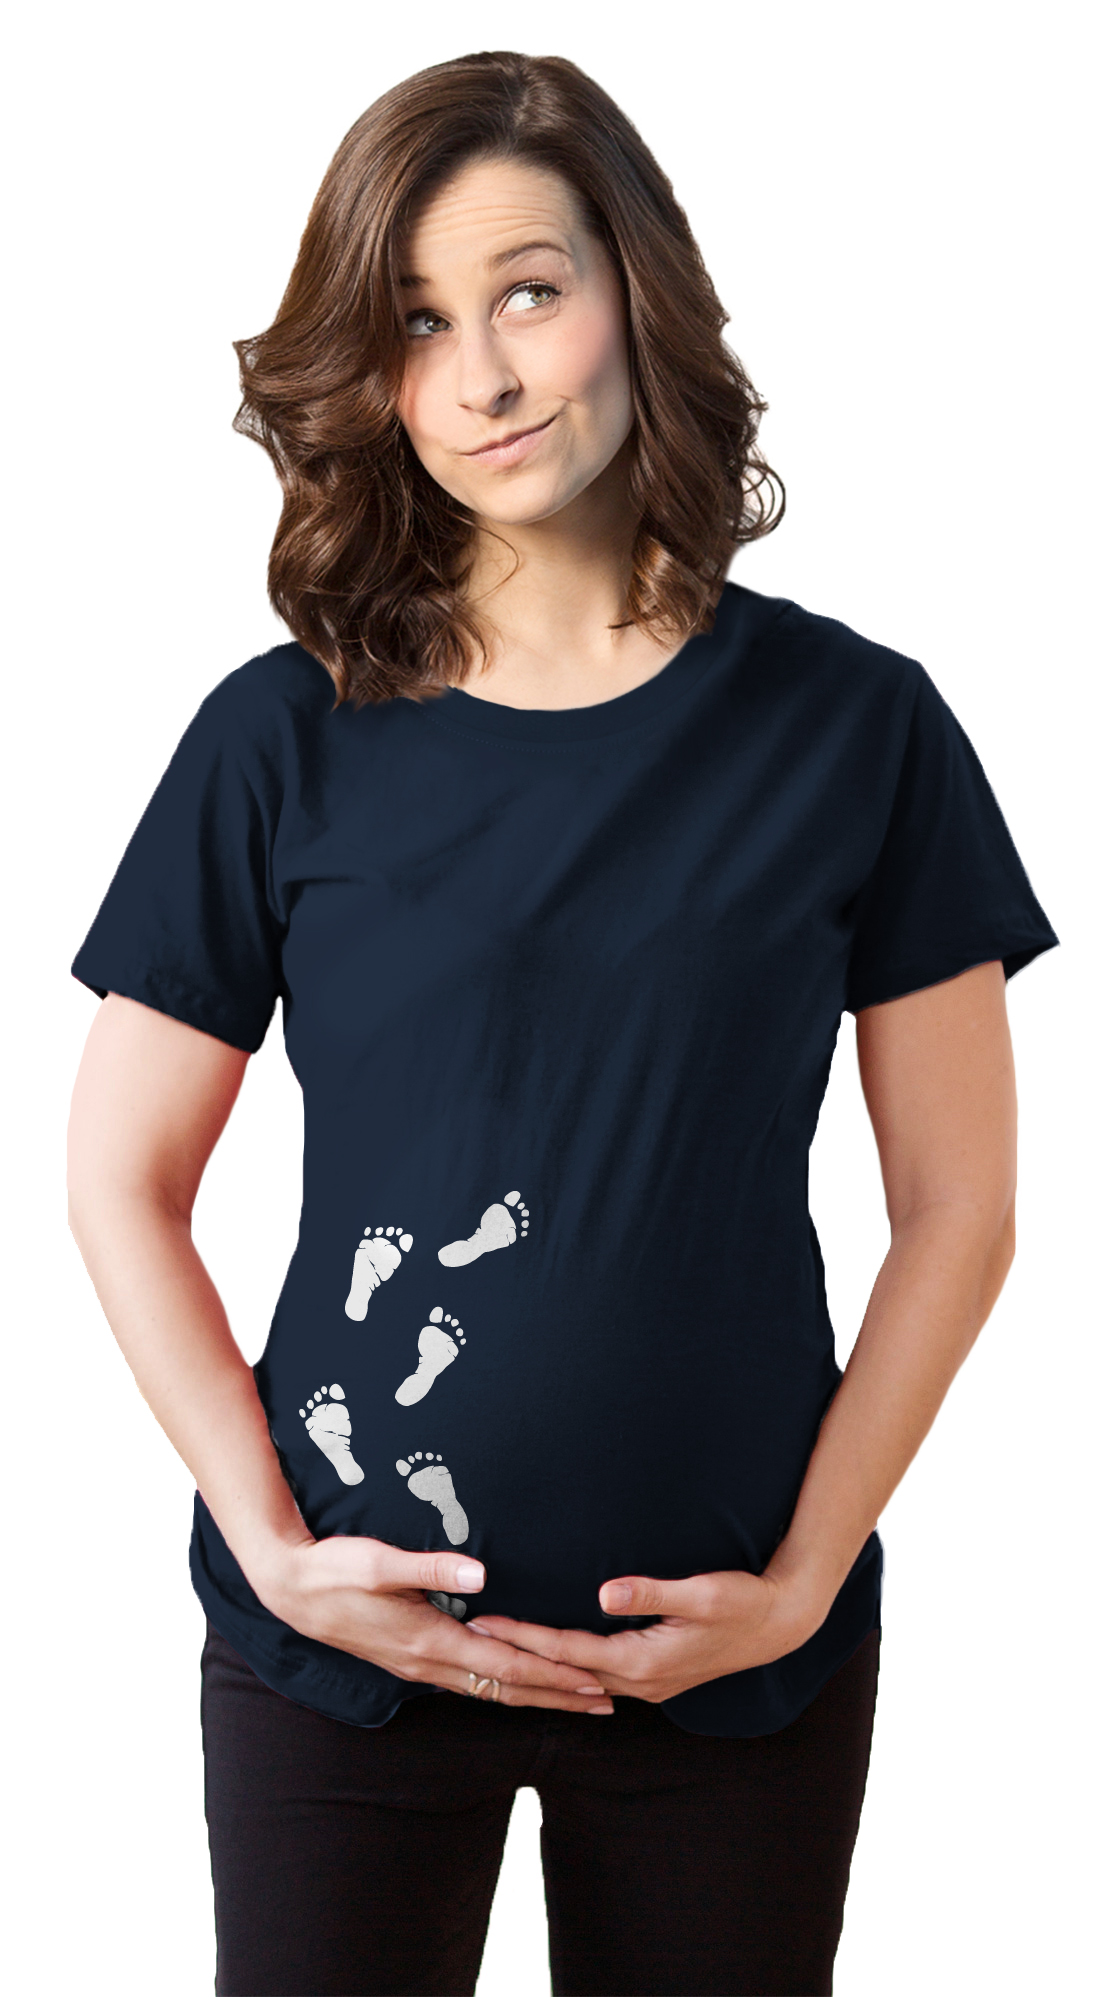 Crazy Dog Tshirts Maternity Baby Bump Footprints T Shirt Funny Cute Graphic Pregnancy Tee